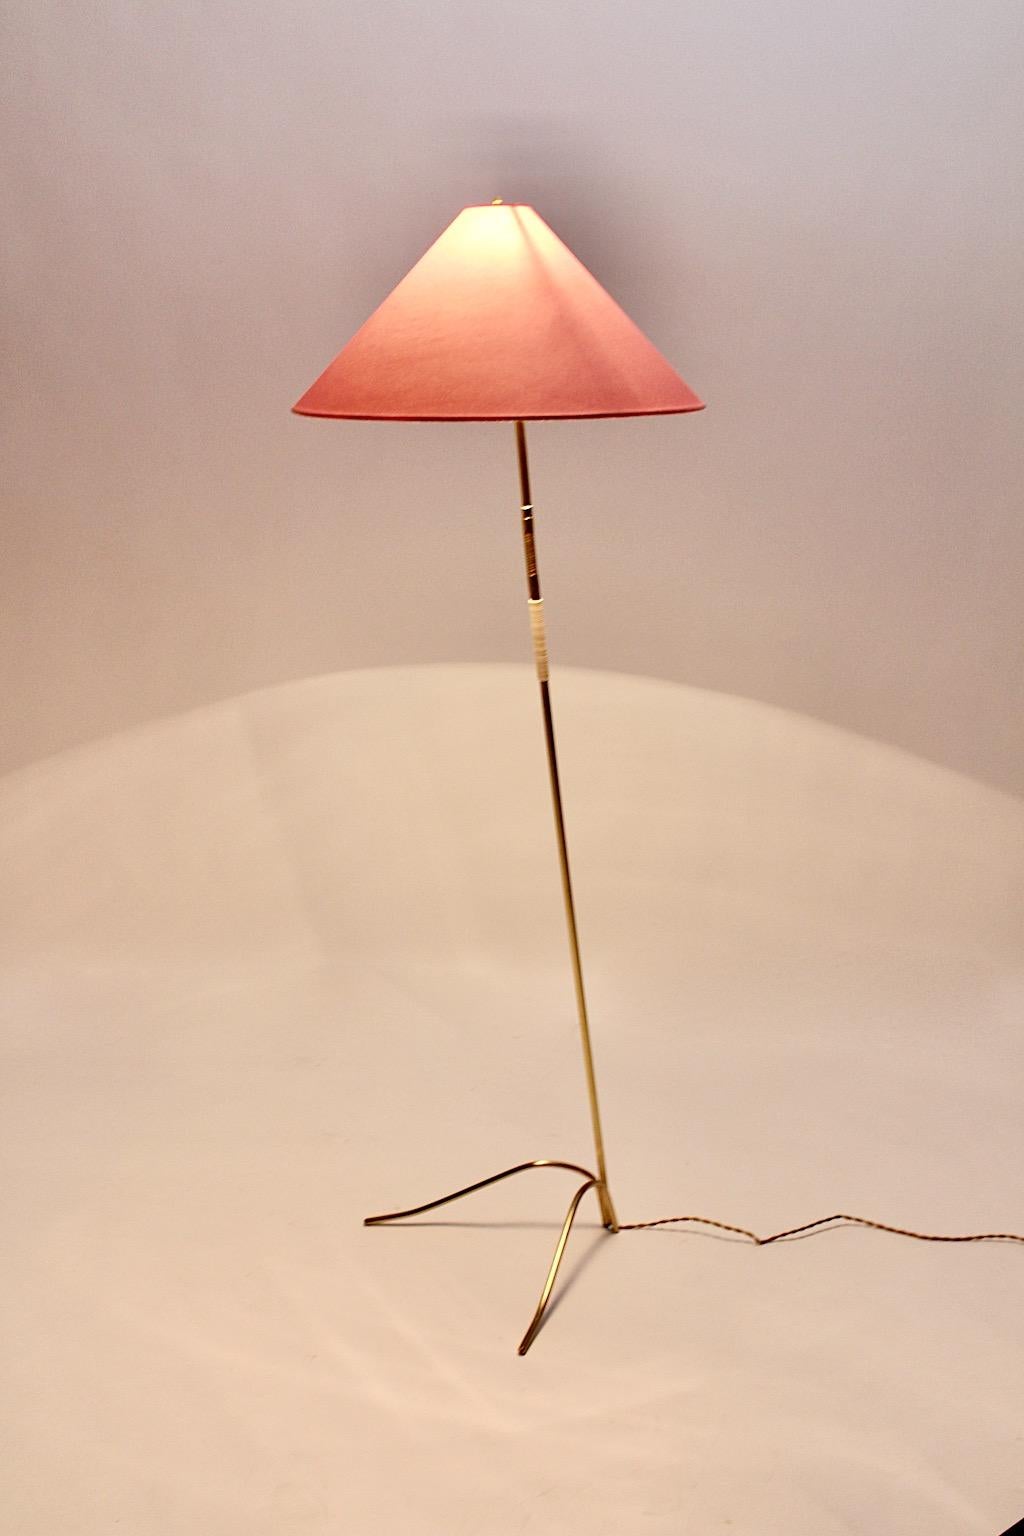 Brass Vintage Mid-Century Modern Splayfoot Floor Lamp Rupert Nikoll 1950 Austria For Sale 7